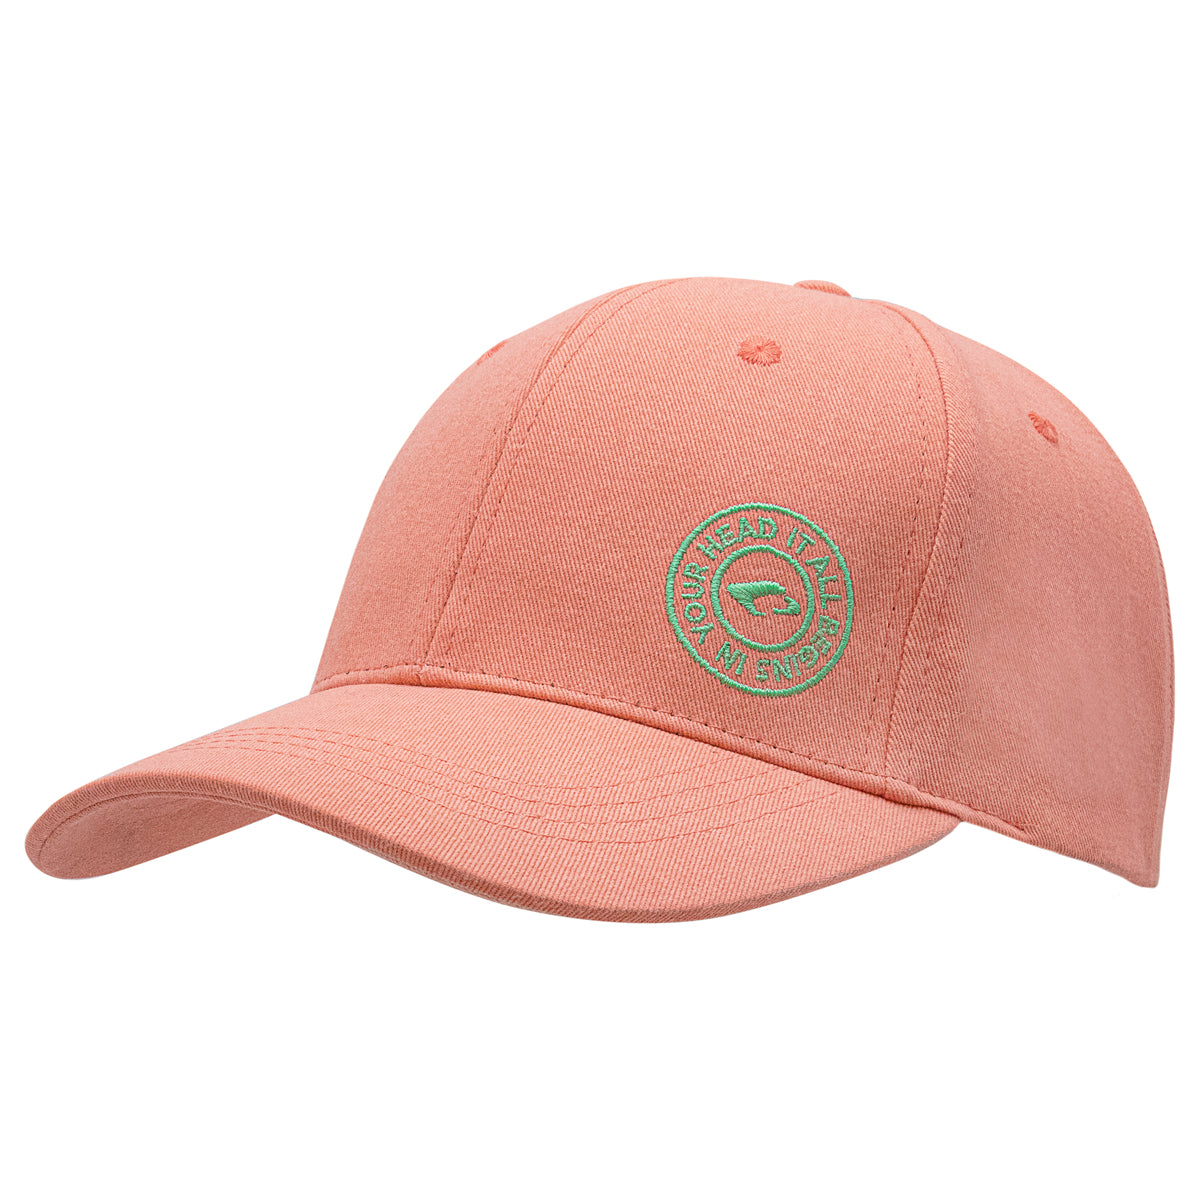 Caps Damen – vielen - Herren Baseball Headwear in Cap für Coole Farben! Chillouts &